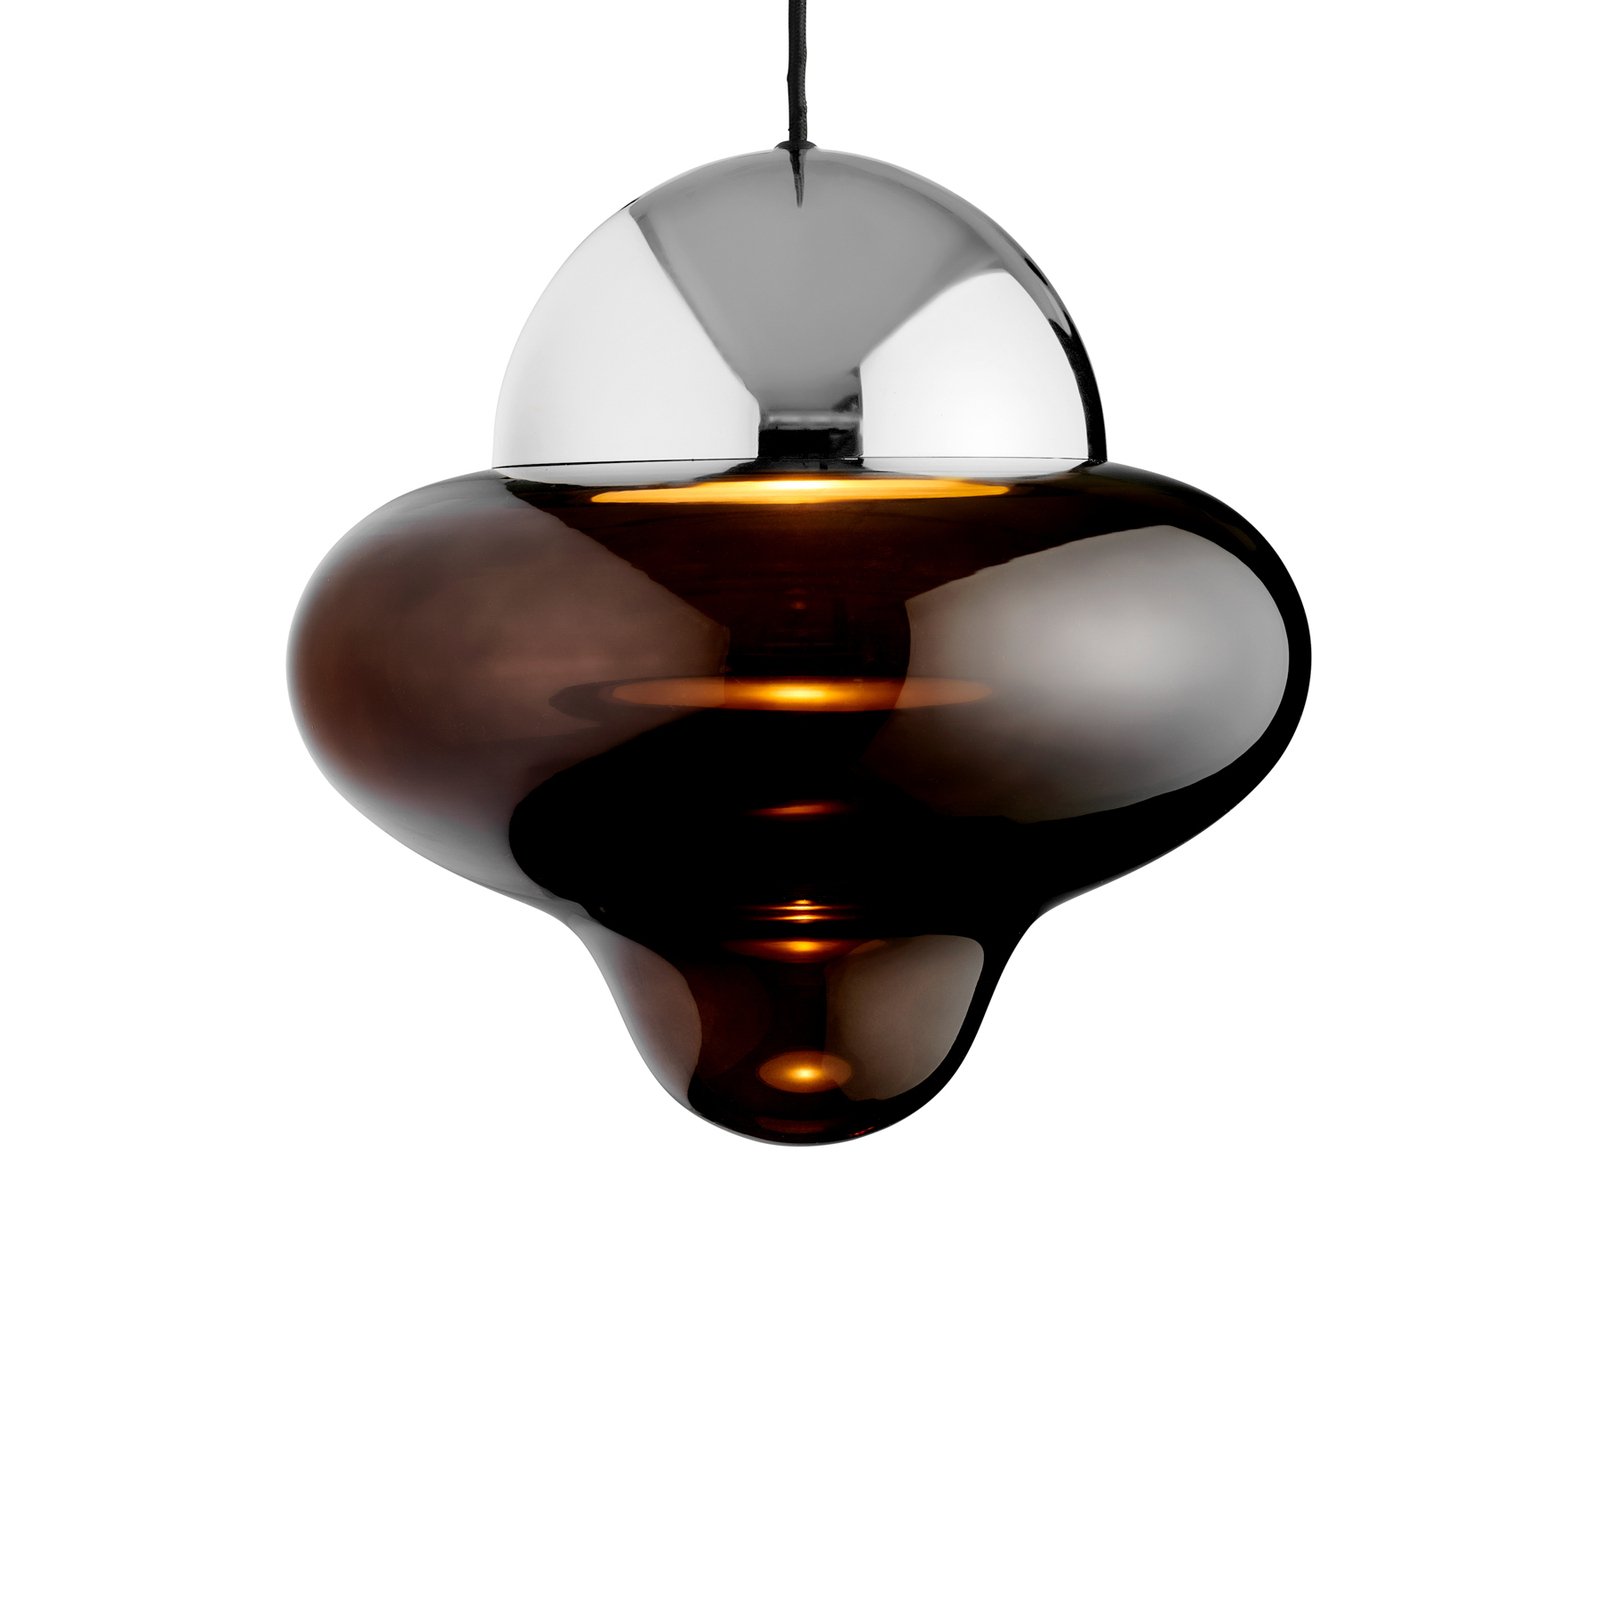 Hanglamp Nutty XL, bruin/chroomkleurig, Ø 30 cm